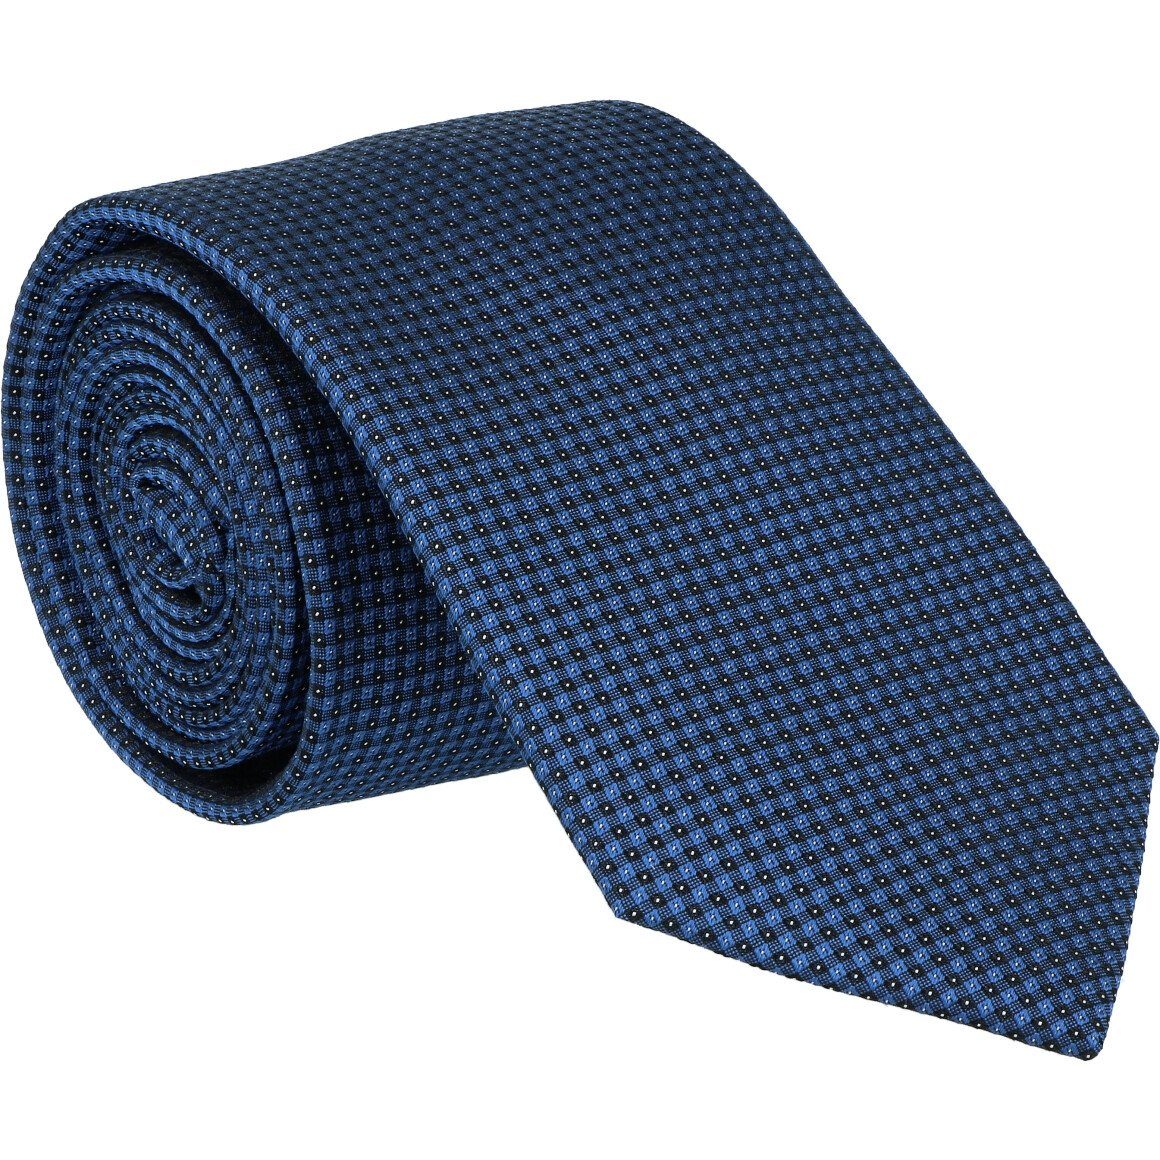 Krawatte Willen blau WILLEN Krawatte